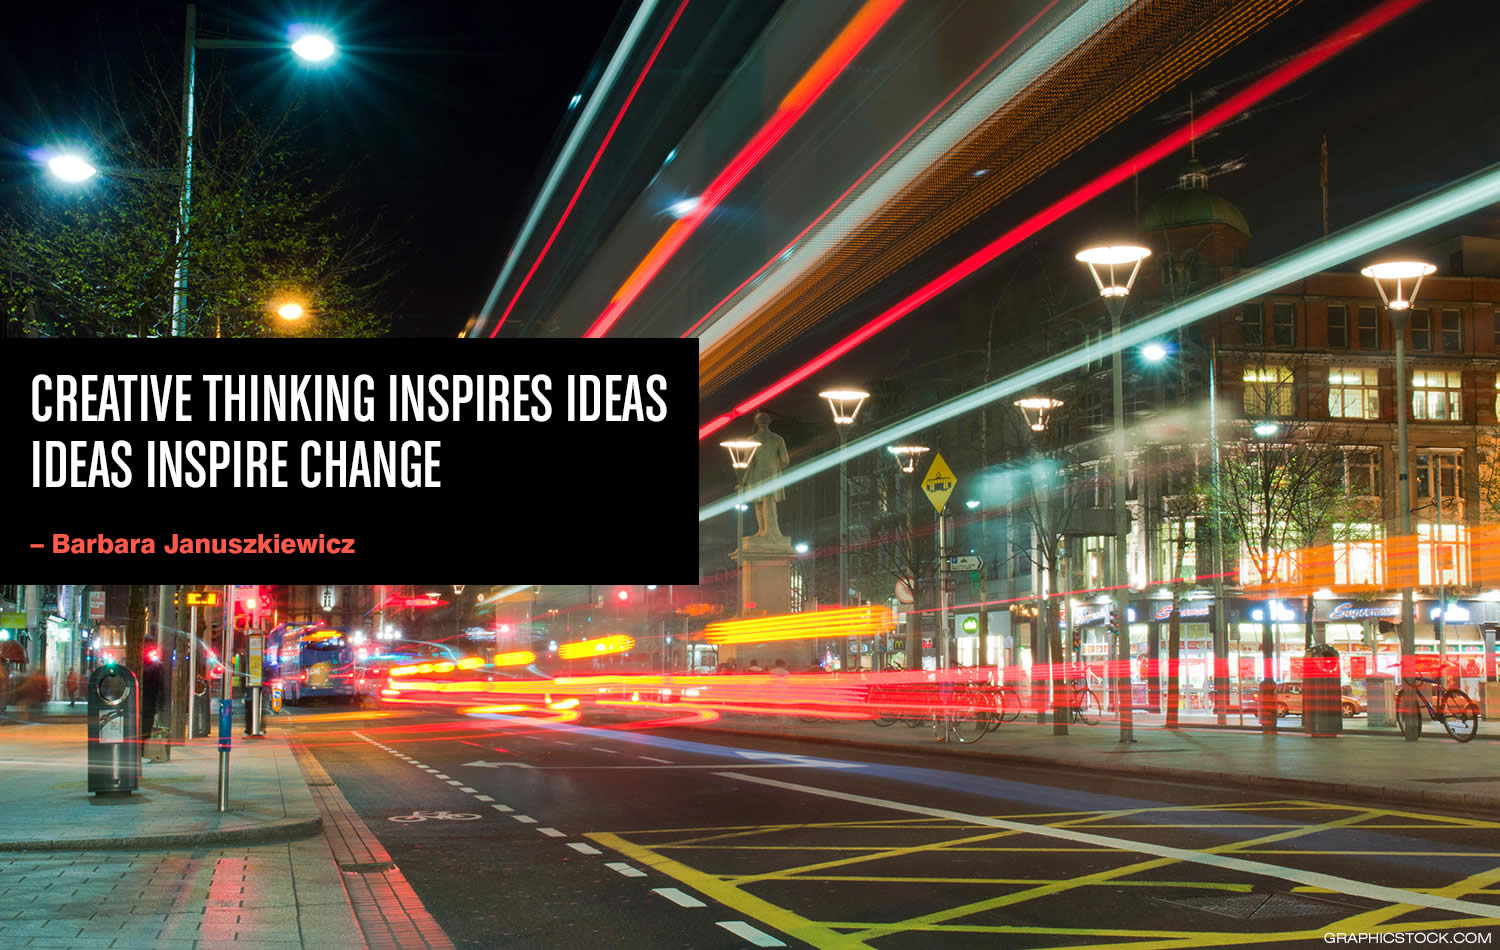 "Creative thinking inspires ideas. Ideas inspire change.” –Barbara Januszkiewicz